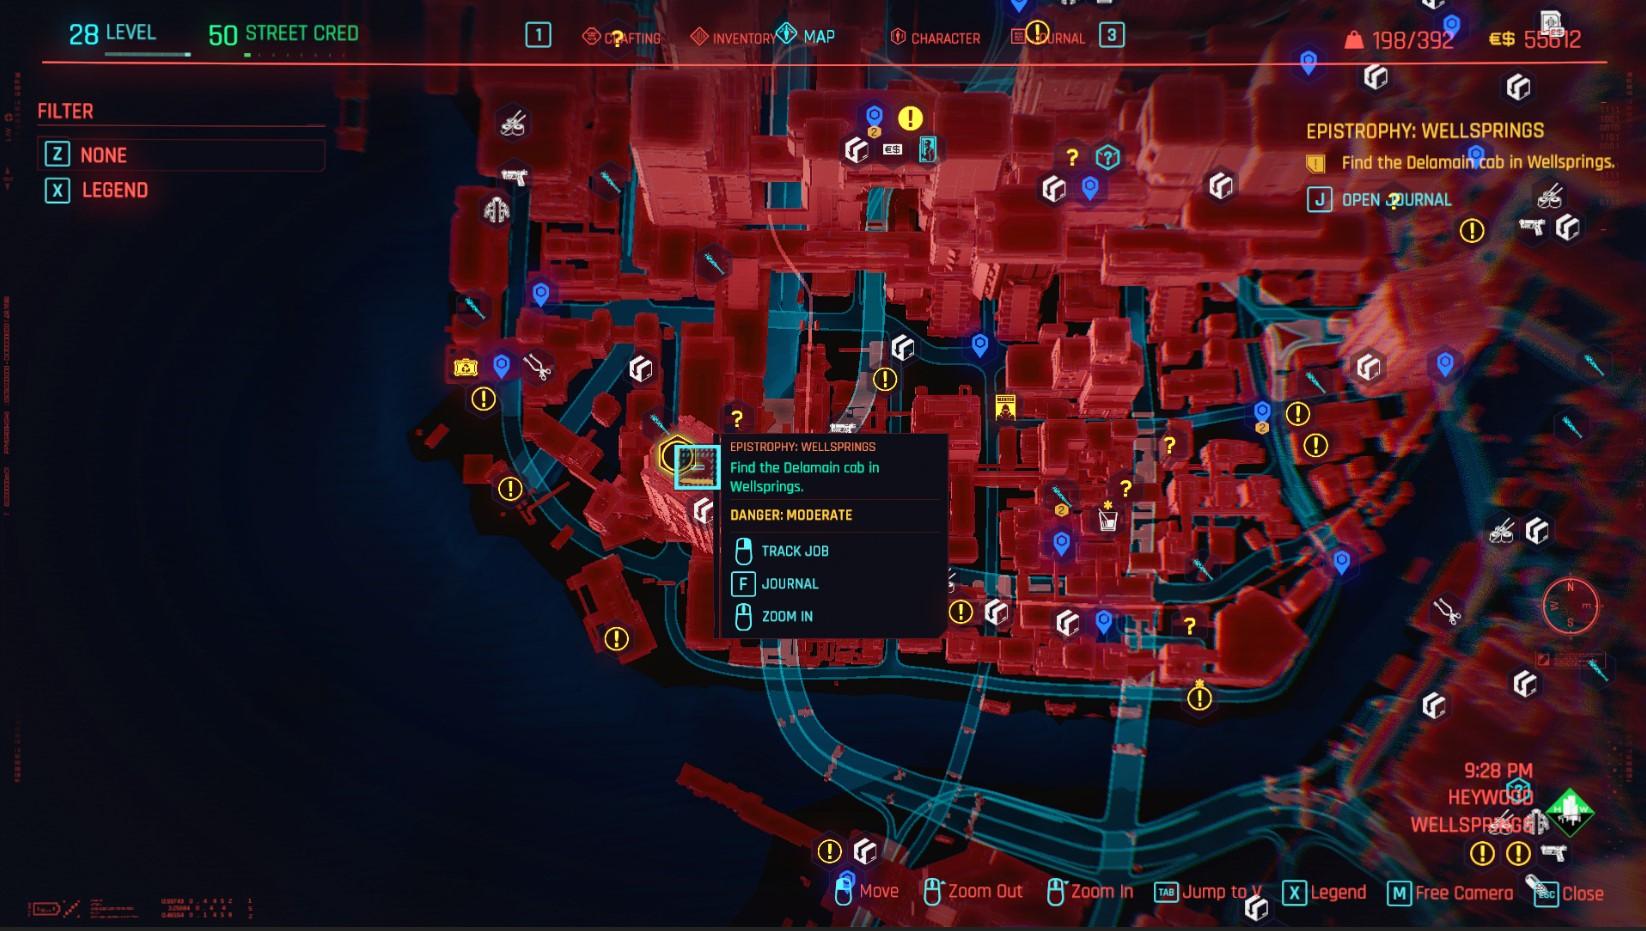 Cyberpunk 2077 Epistrophy: Every Delamain car location